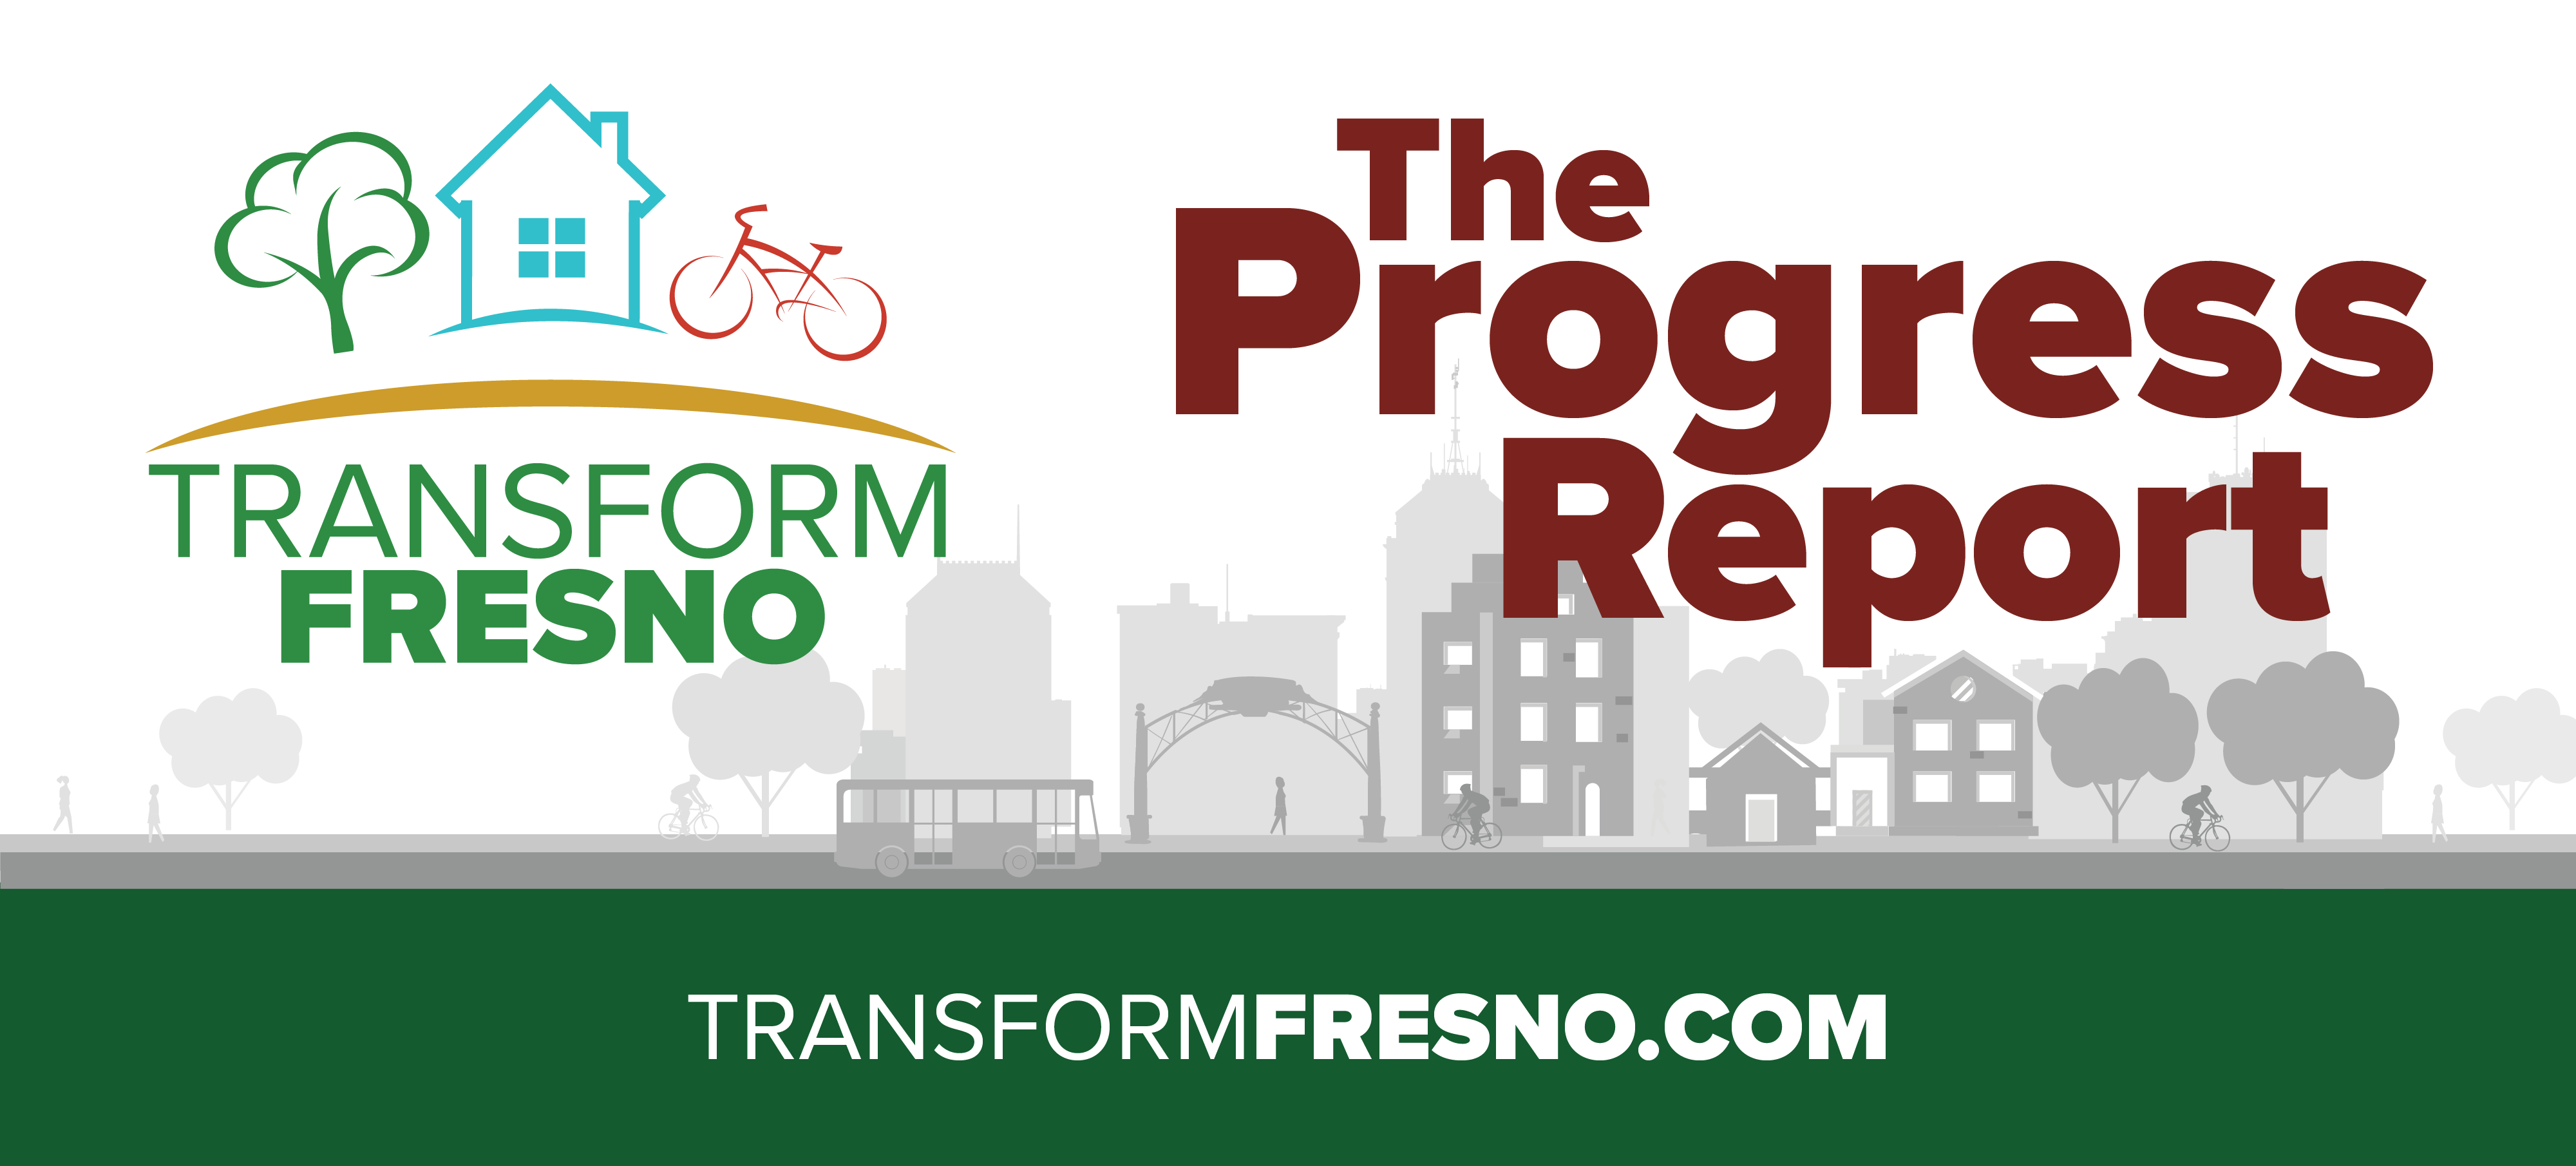 The Progress Report Newsletter logo : TransformFresno.com